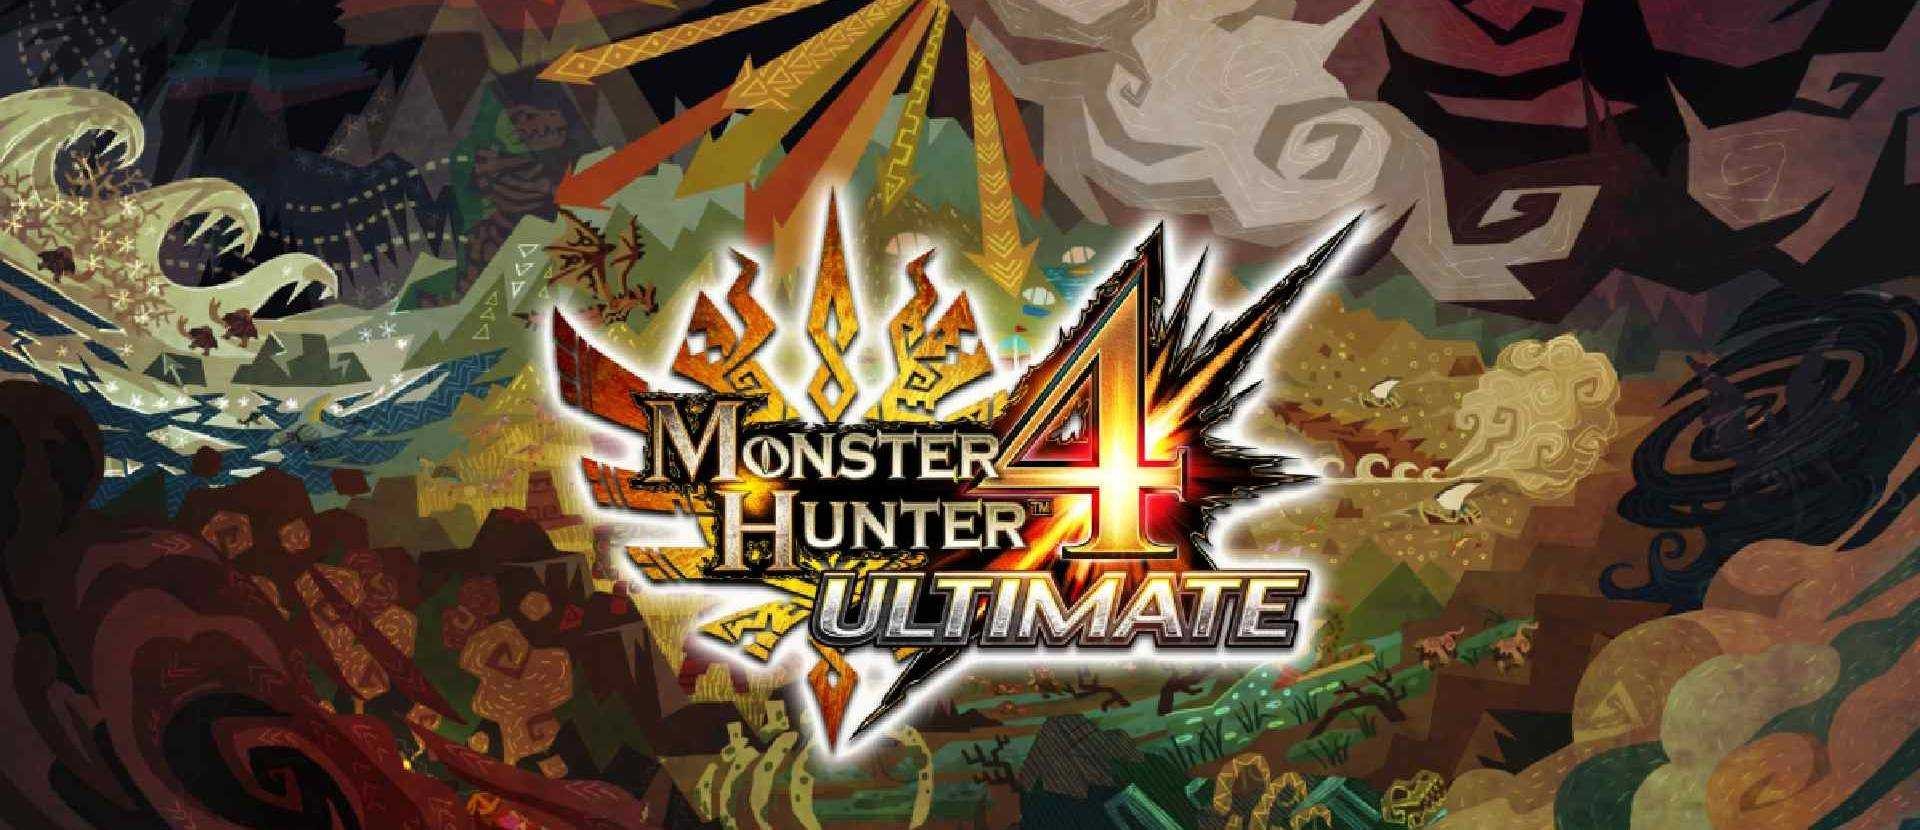 50-sac-thai-trong-monster-hunter-4-ultimate